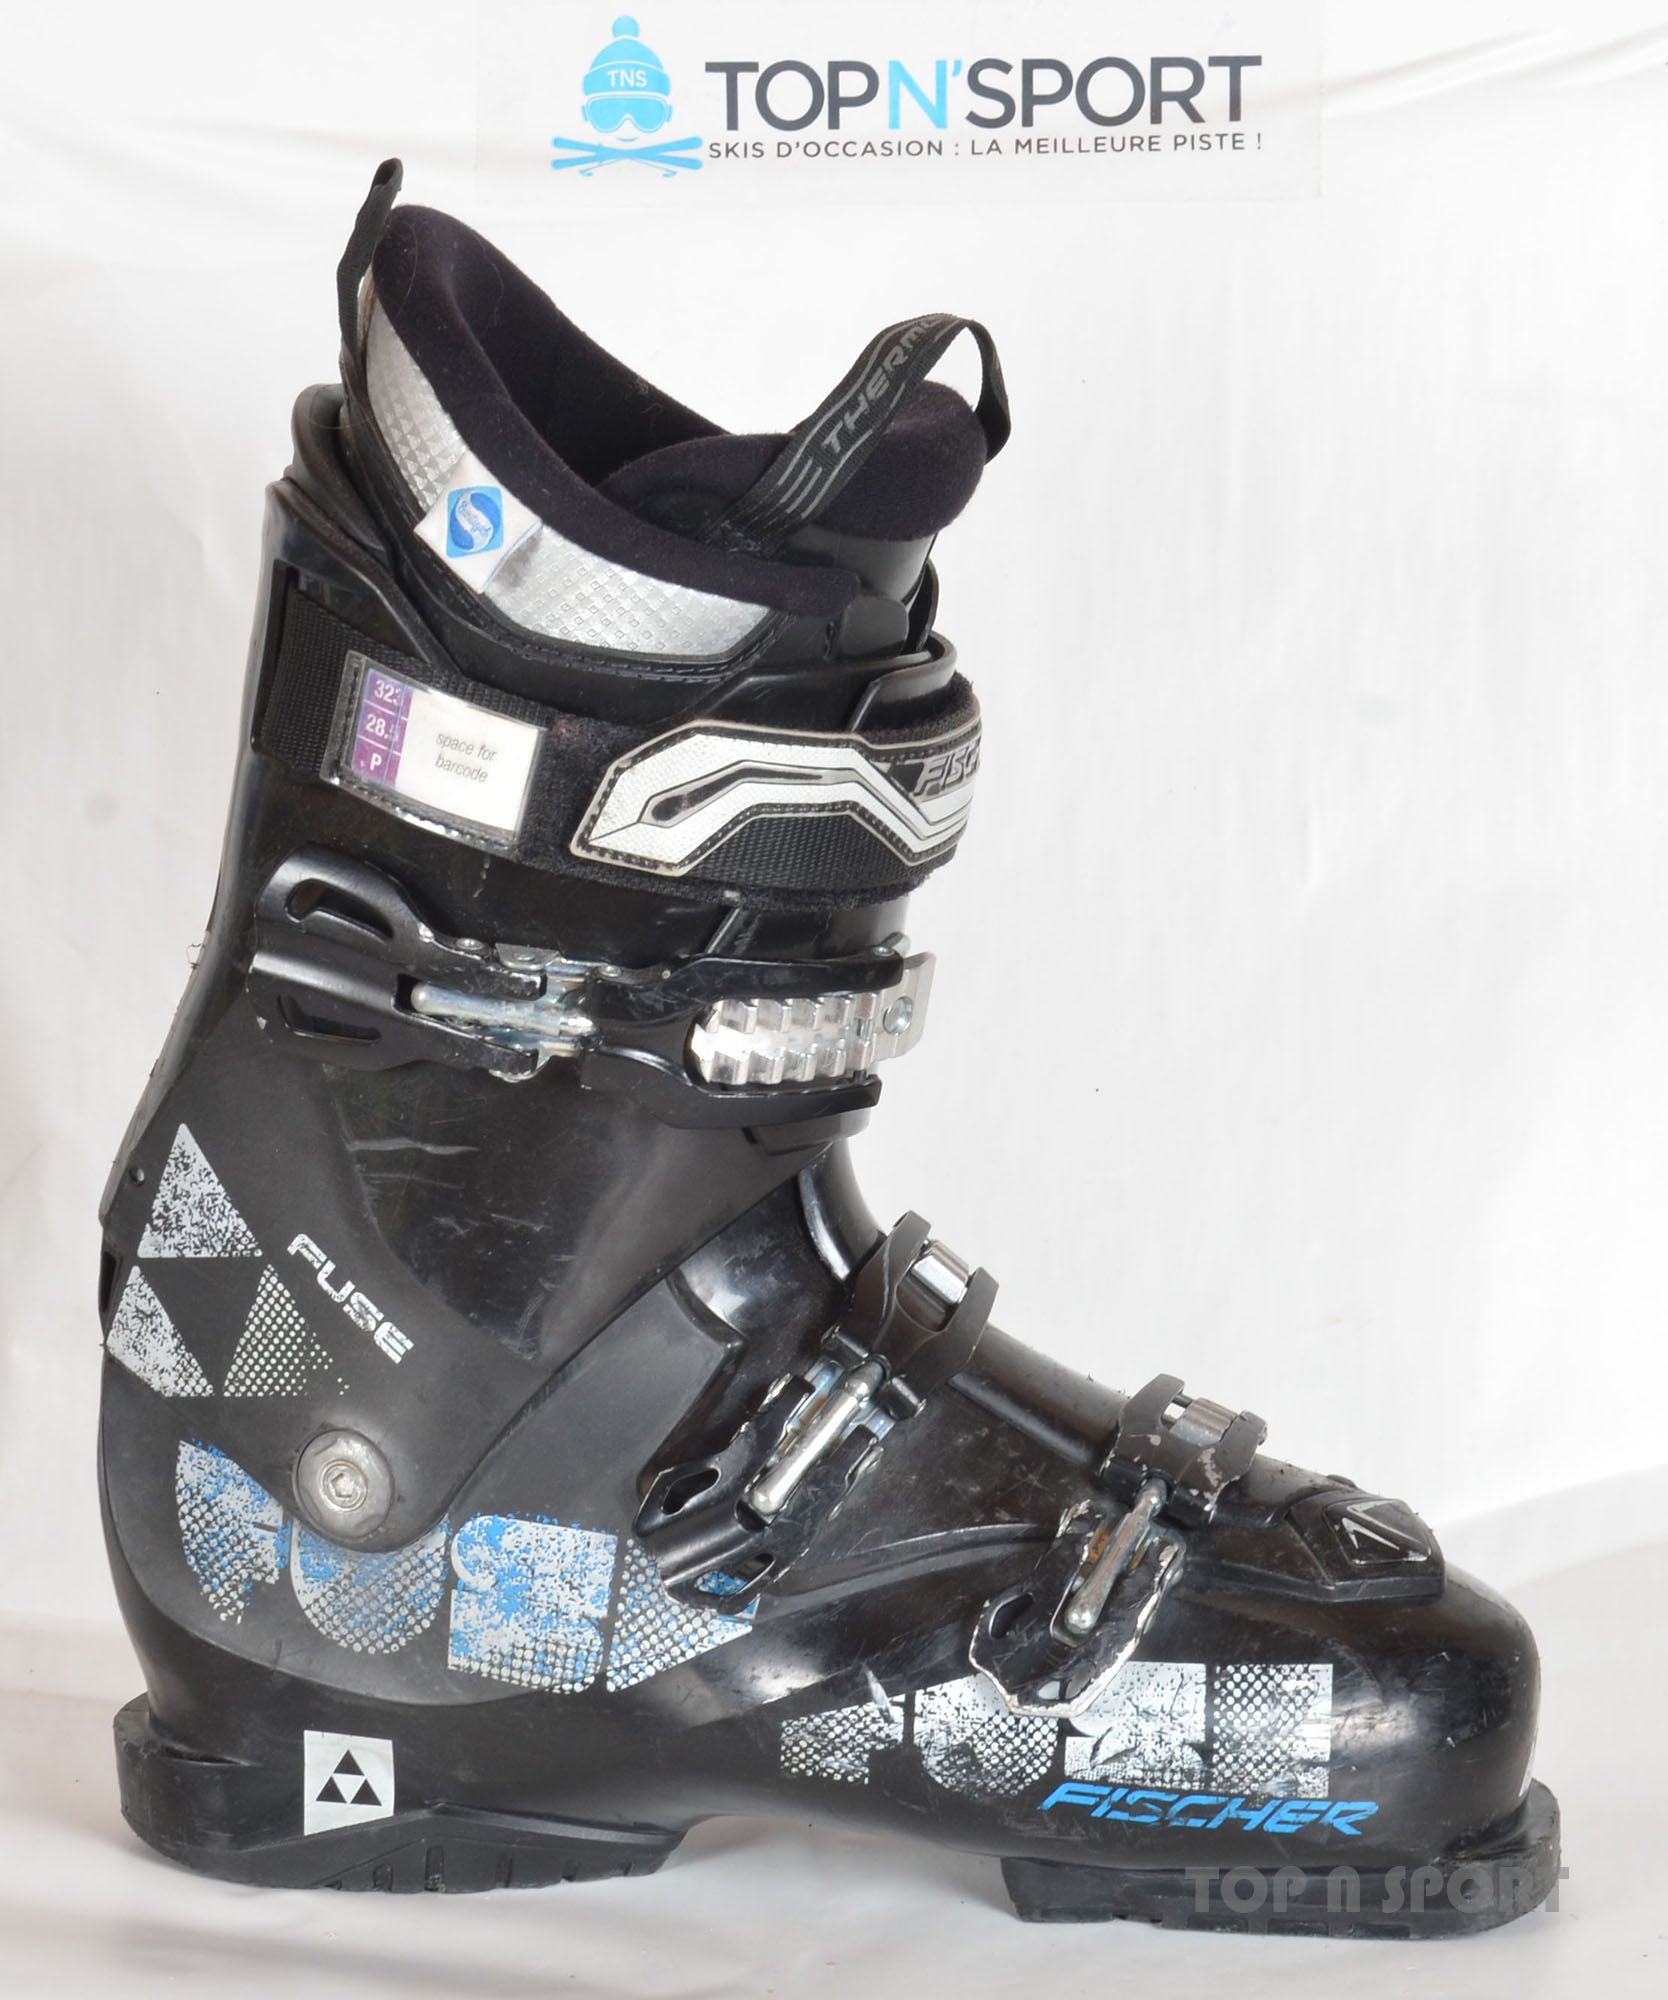 Vente de ski d'occasion, chaussures de ski d'occasion - SkiOccas